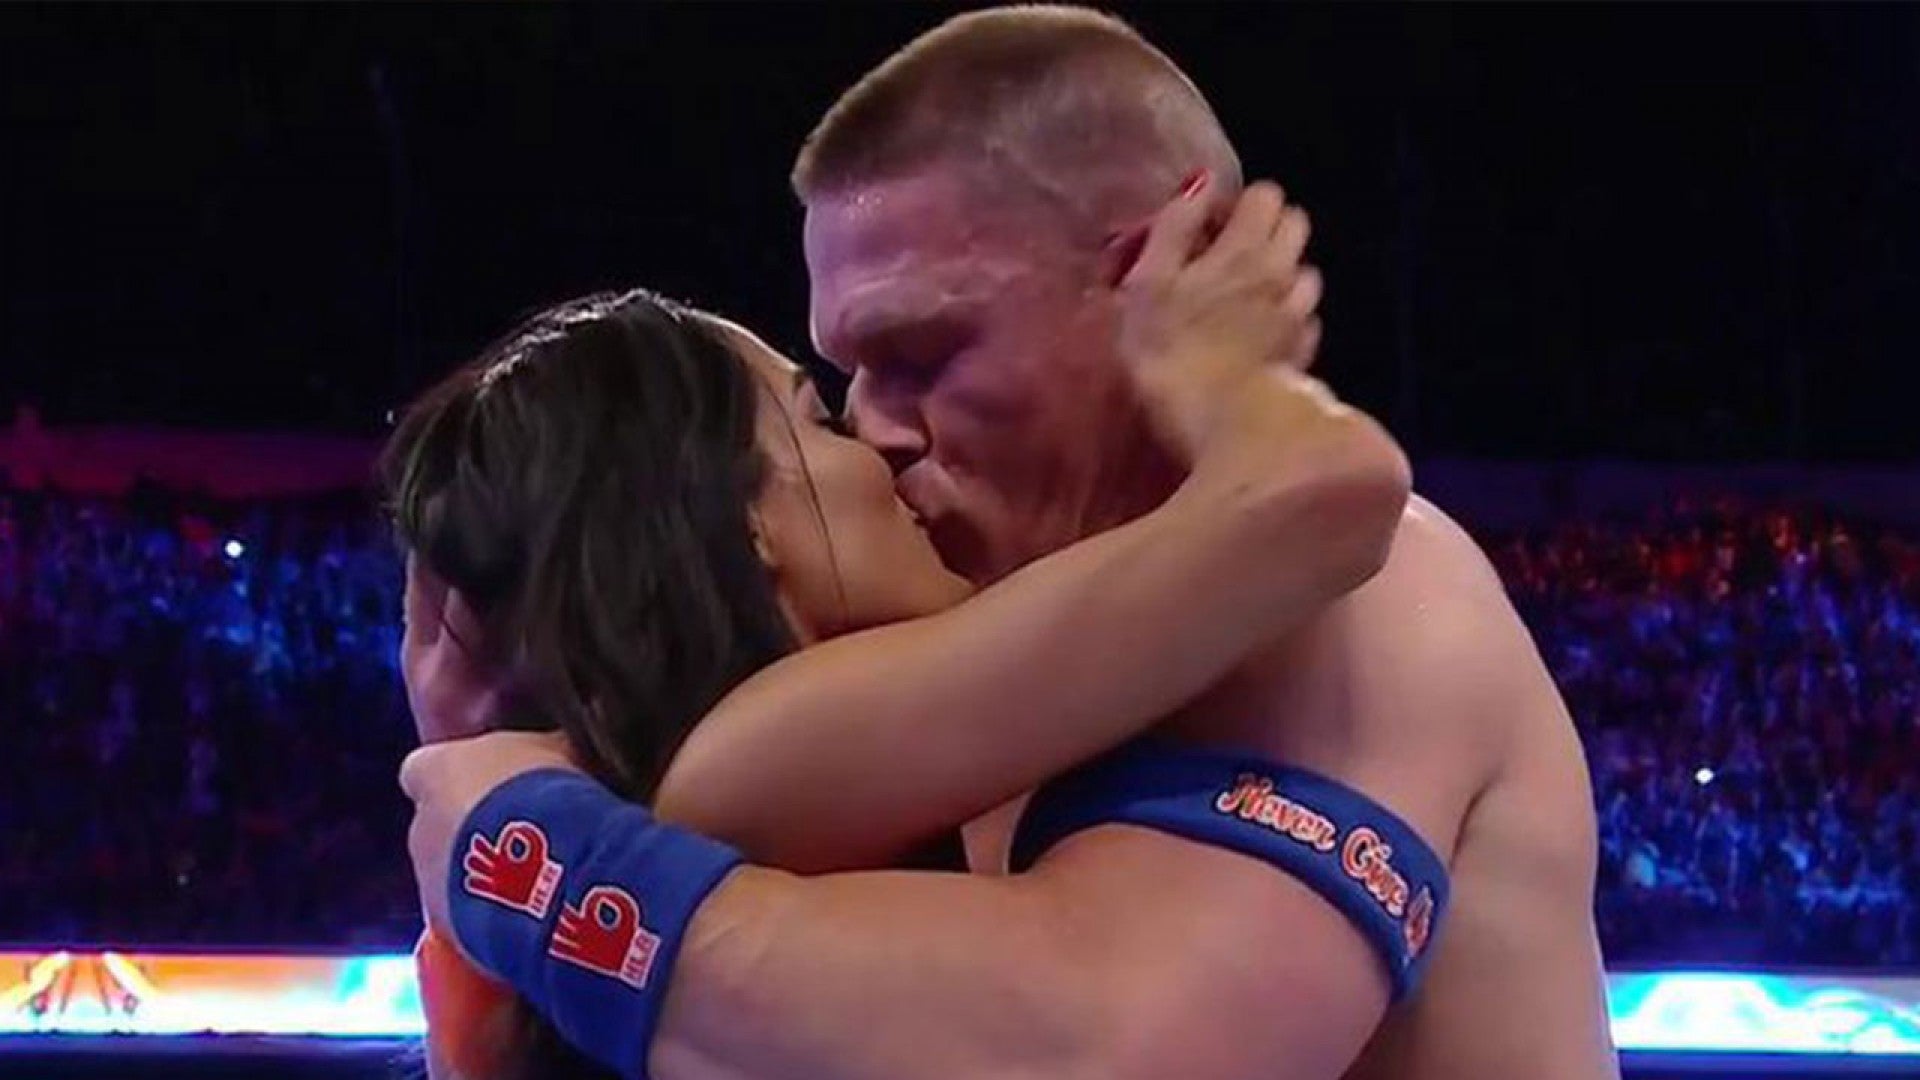 Jon Sena Sex - WWE Star John Cena Proposes to Longtime Girlfriend Nikki Bella at  WrestleMania 33!